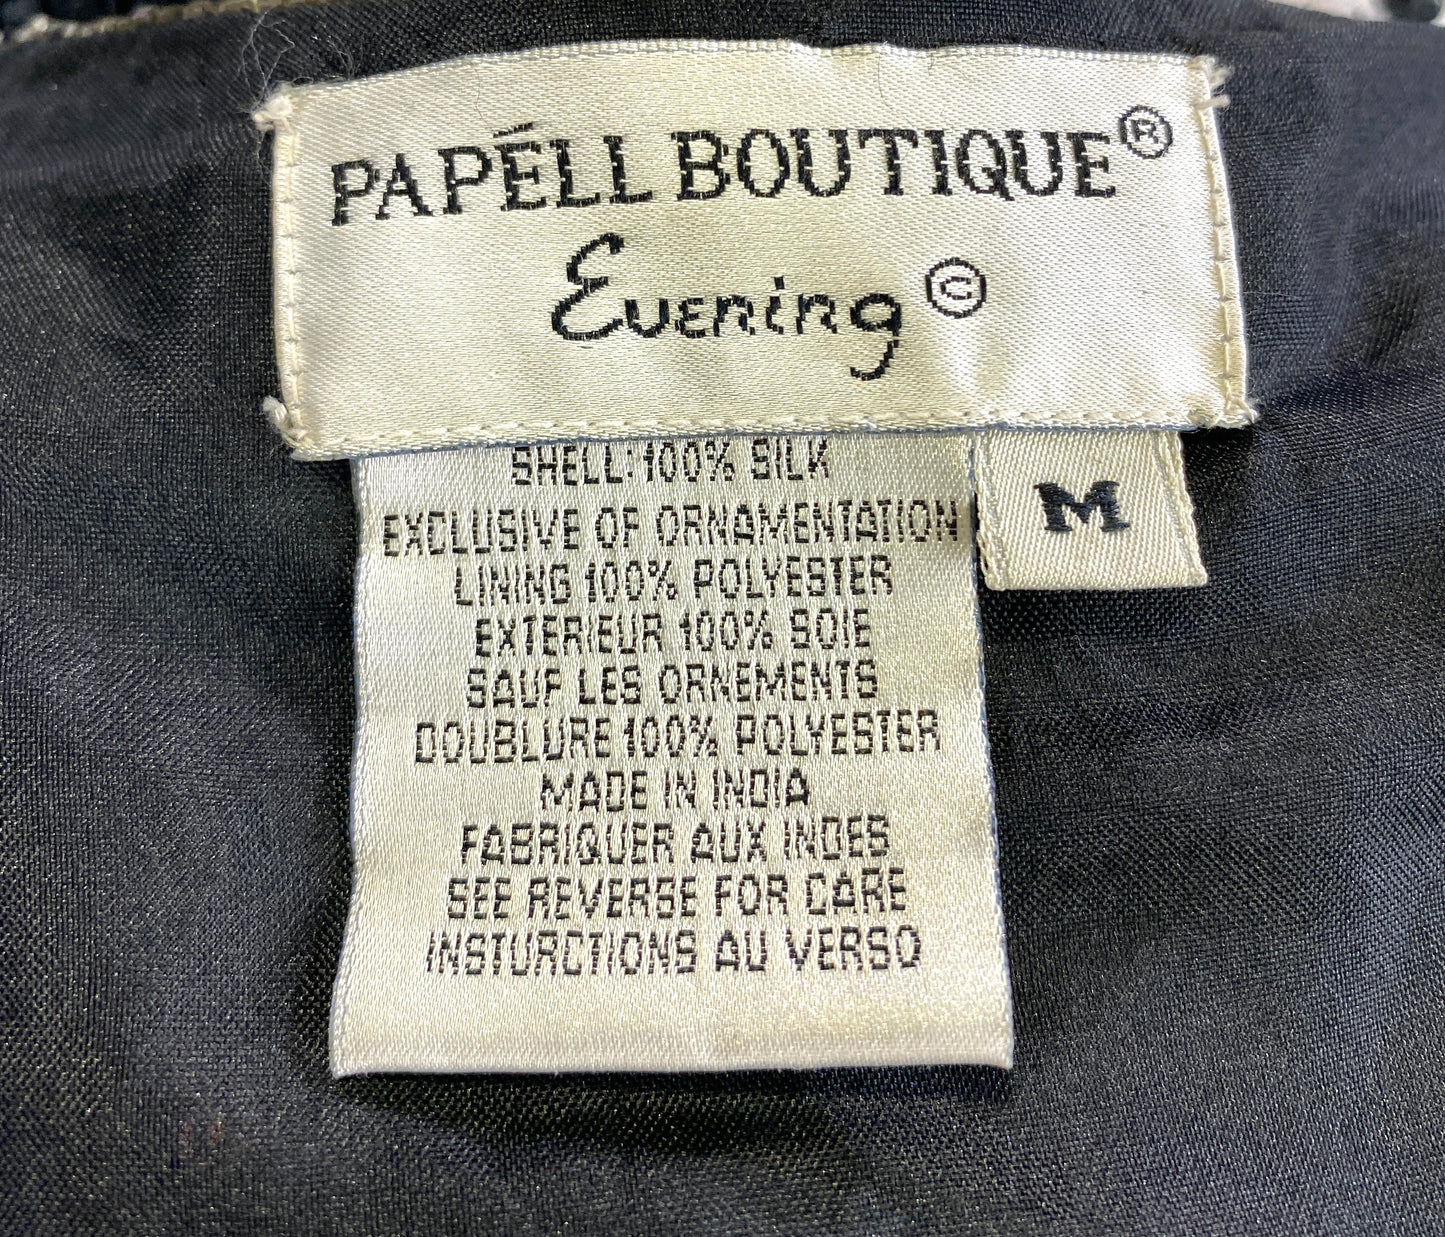 Vintage 1980s Black Beaded Sequin Cardigan Jacket, Papell Boutique, Medium 